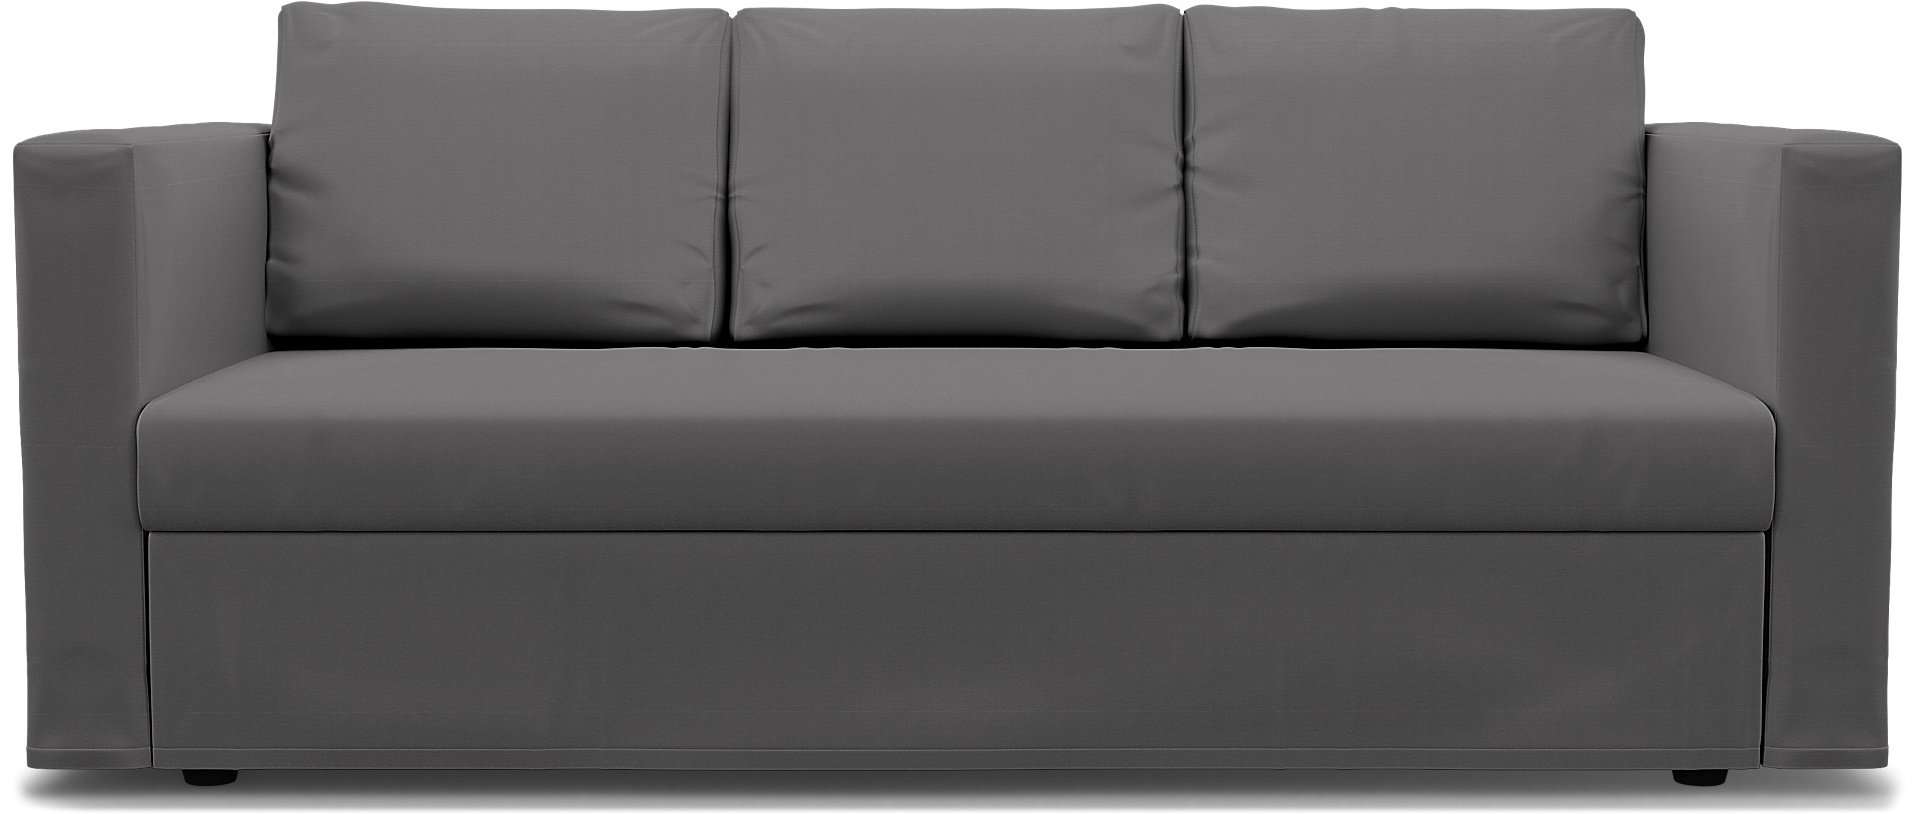 IKEA - Friheten 3 Seater Sofa Bed Cover, Smoked Pearl, Cotton - Bemz